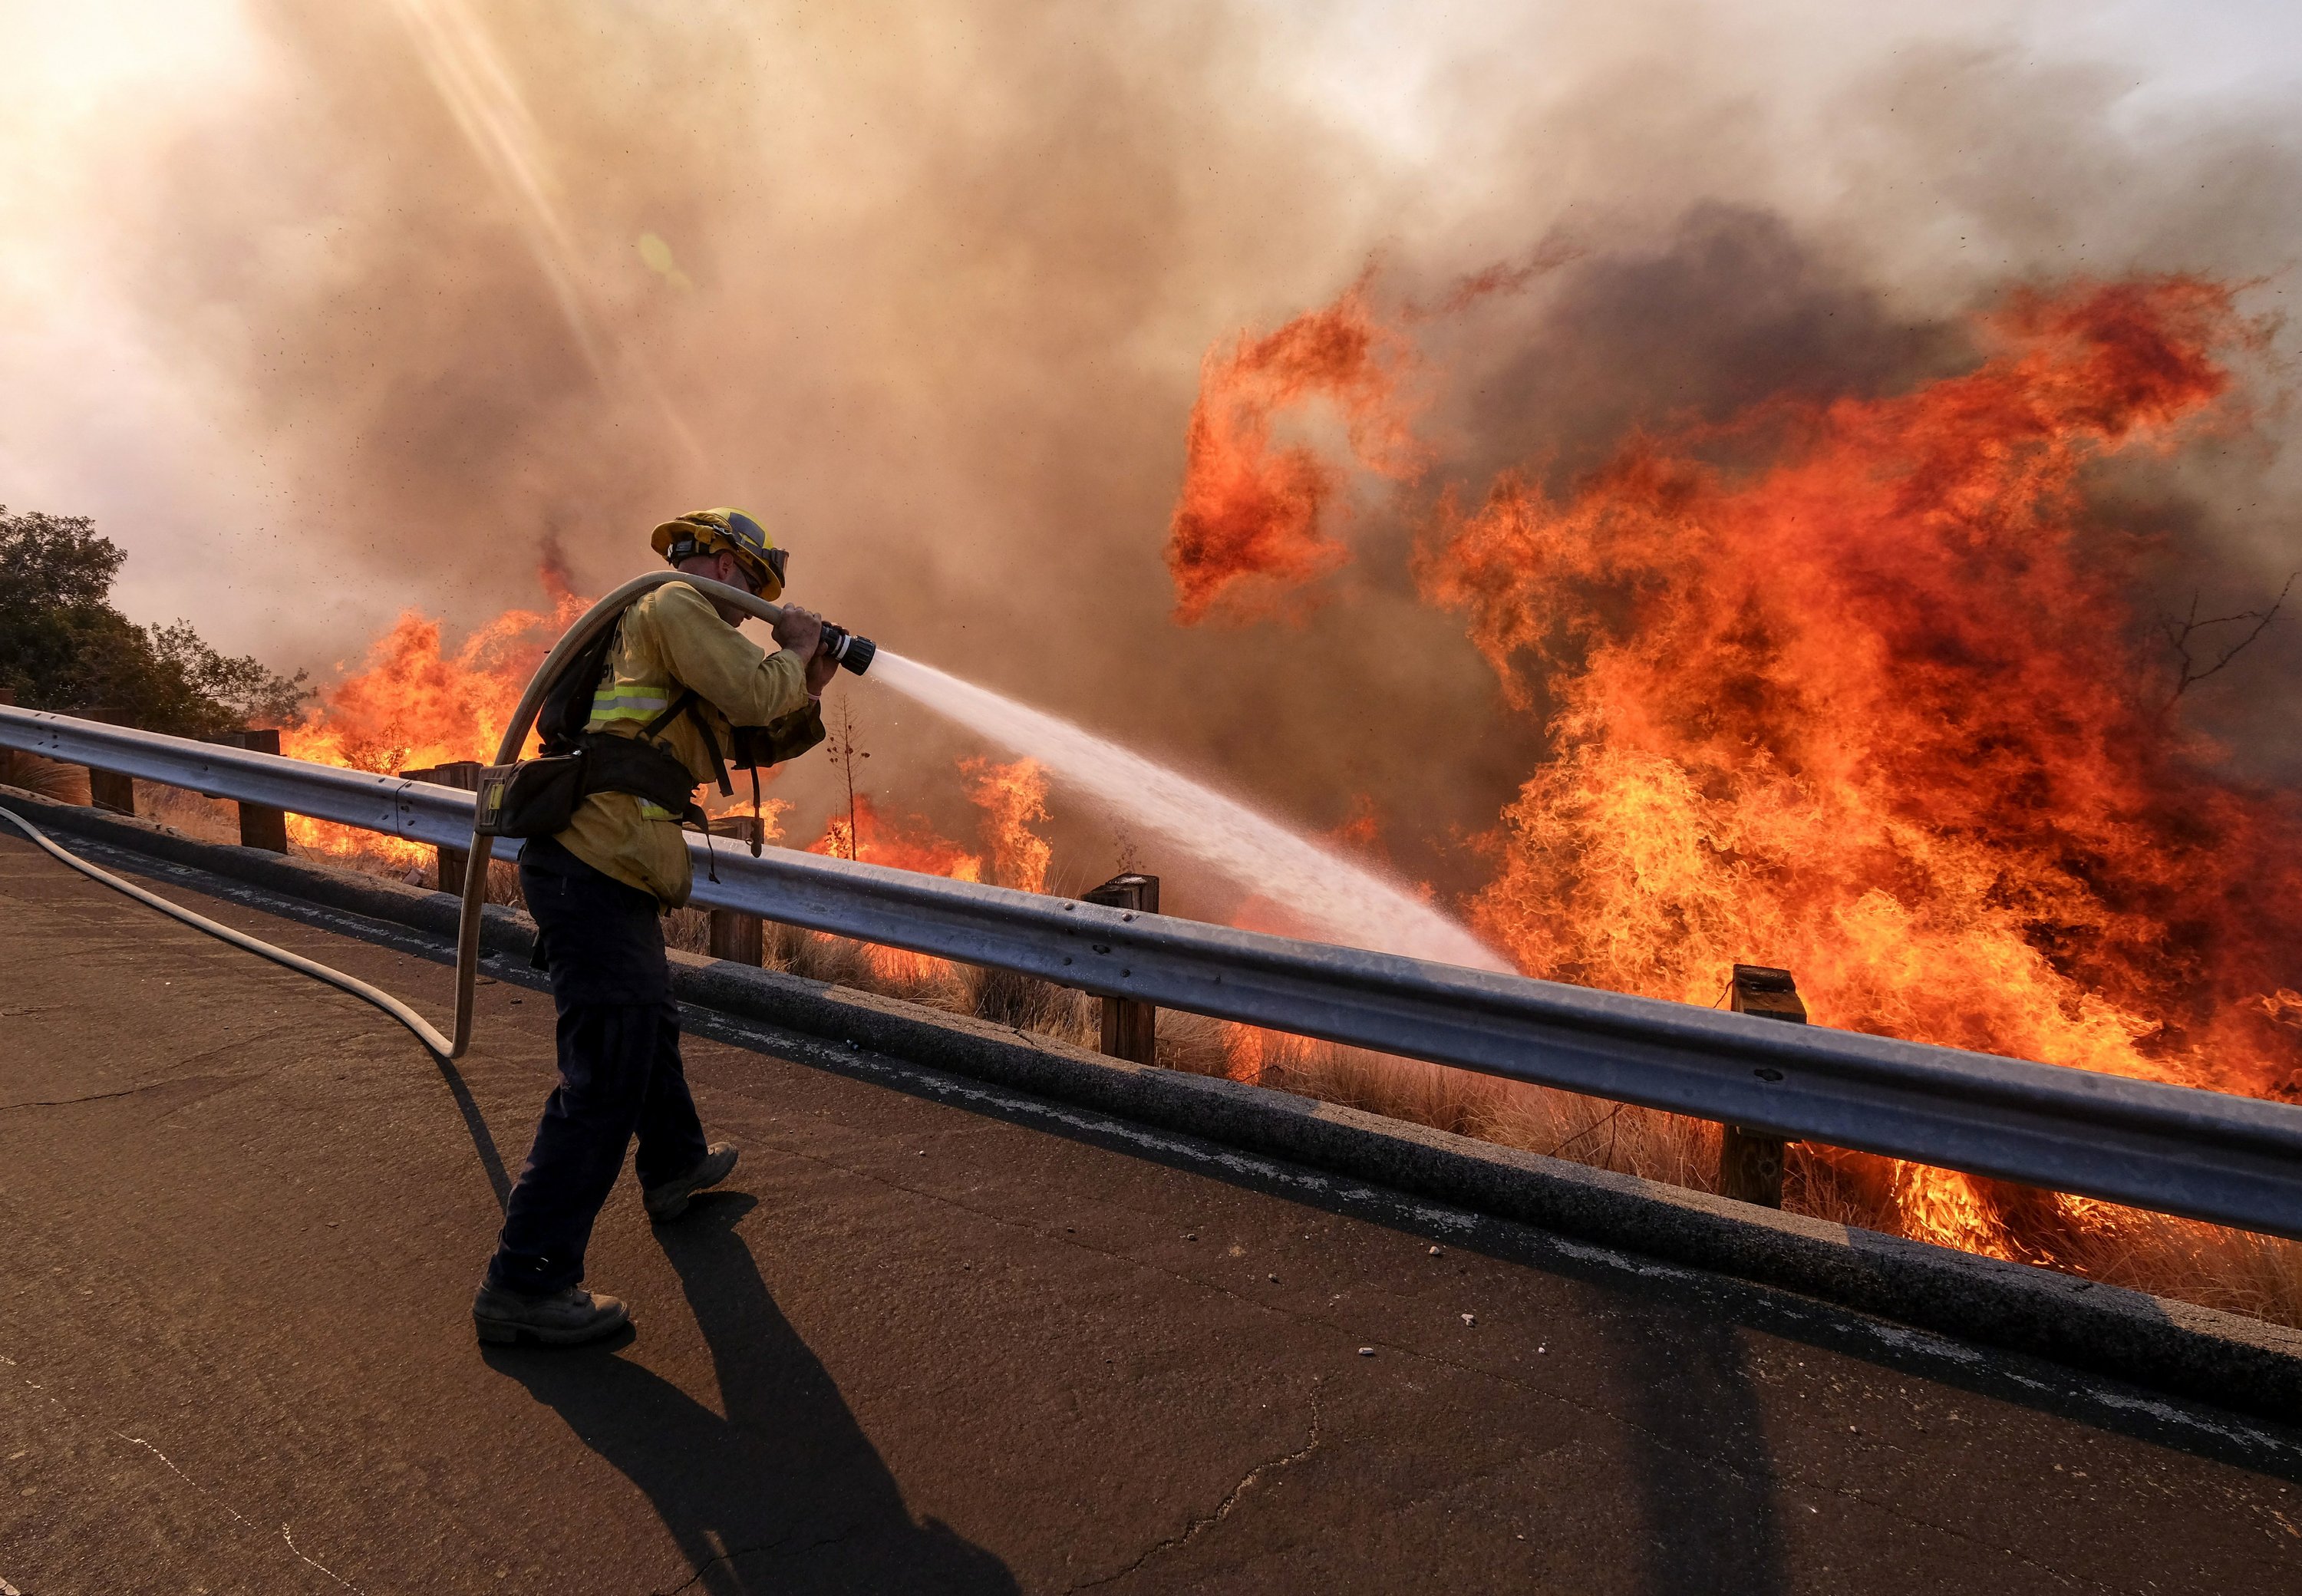 Firefighter battles the flames. (Credit: AP)